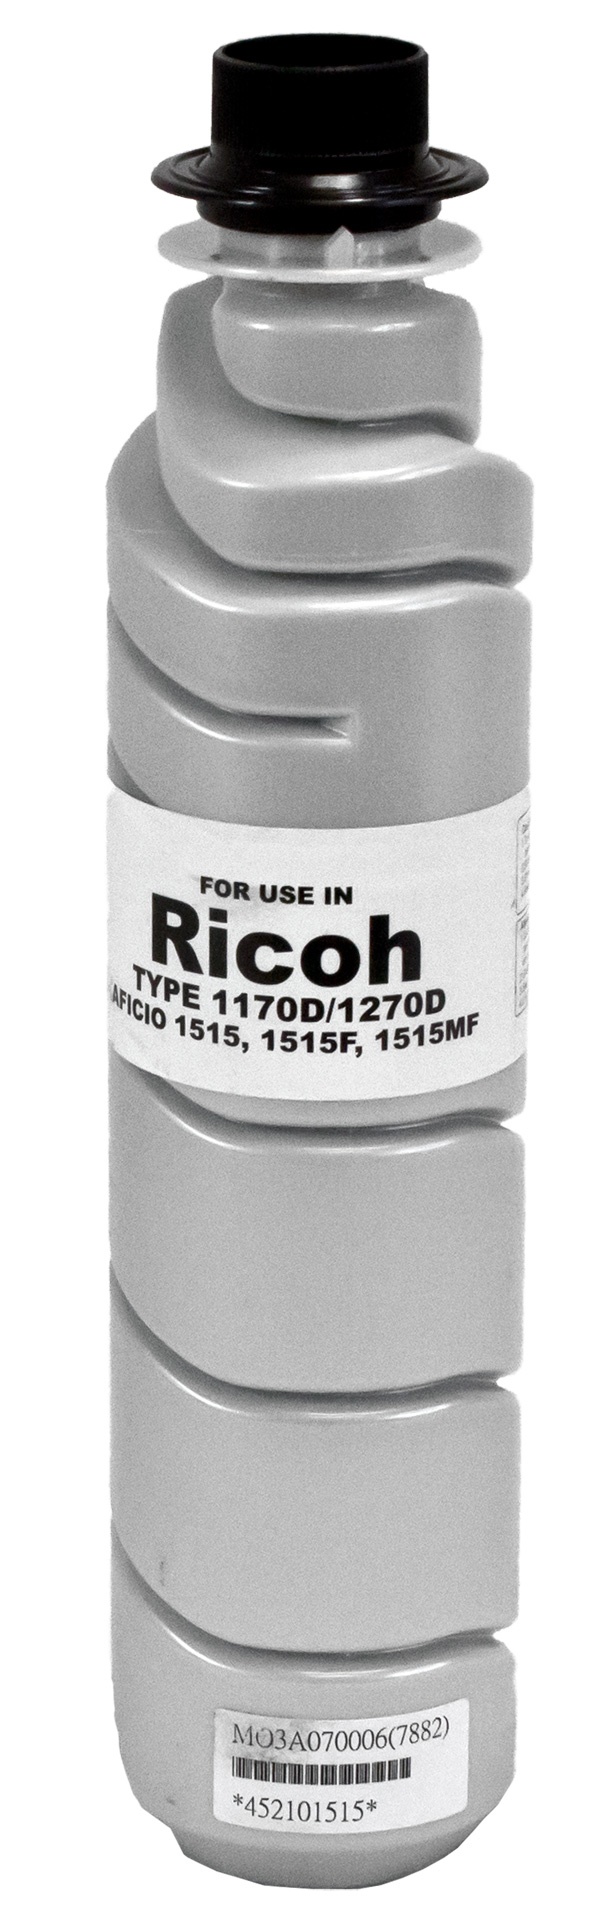 Ricoh OEM 885531, 888260, TYPE 1170 Compatible Toner Cartridge: Black, 7K Yield, 1-230 GR